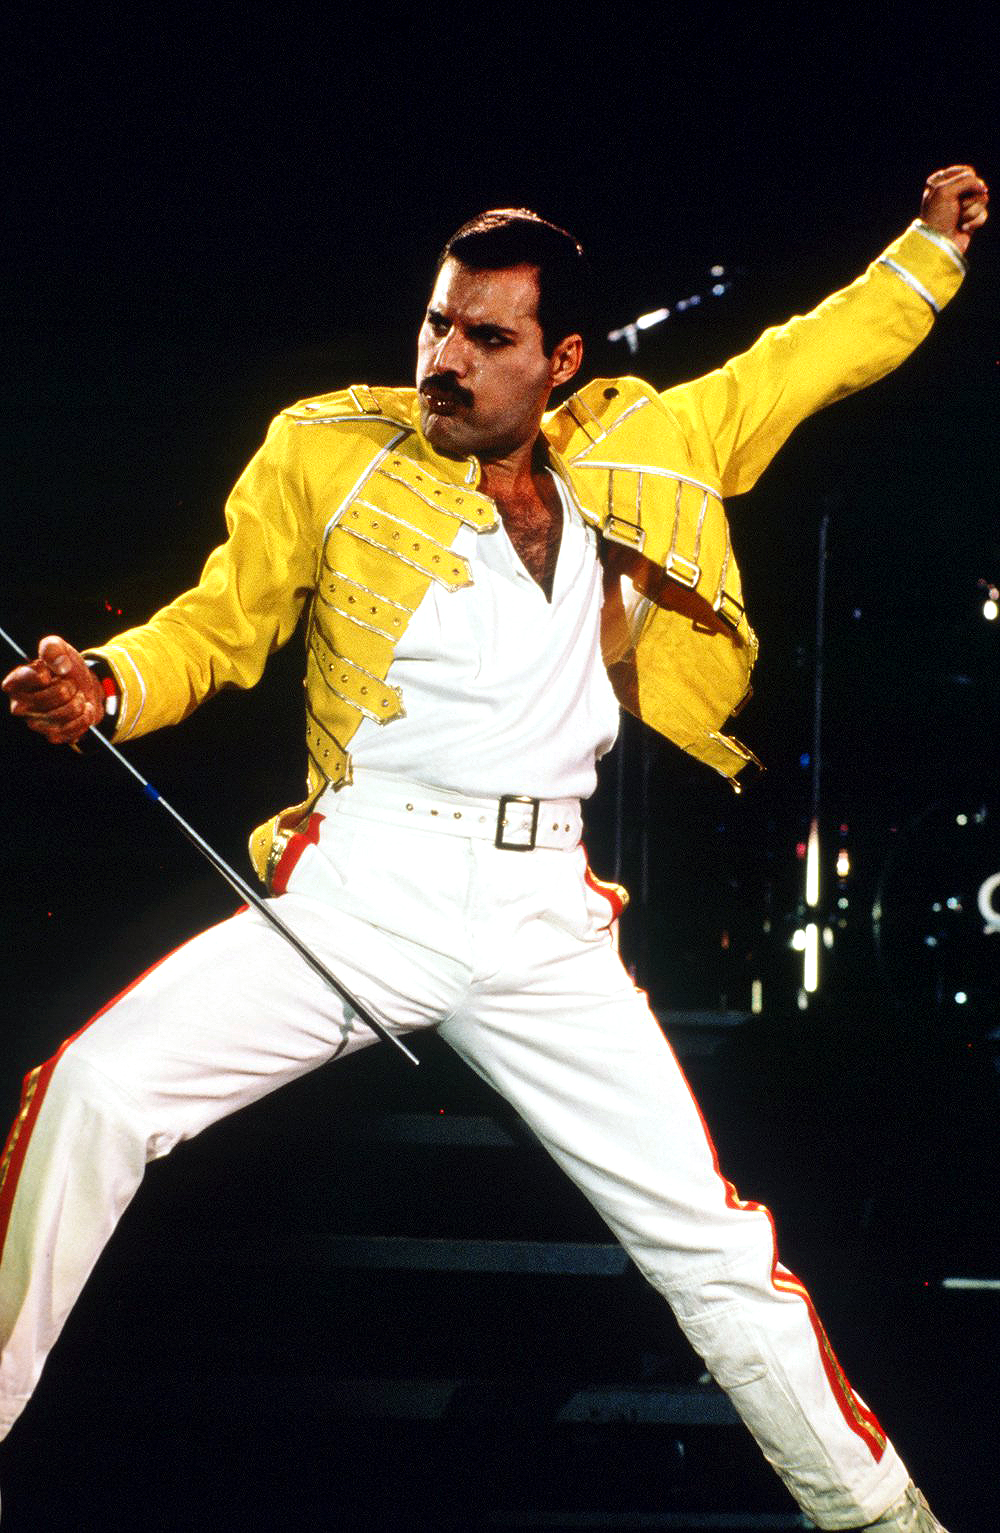  Freddie  Mercury  Replica Yellow Jacket Costume at Wembley 